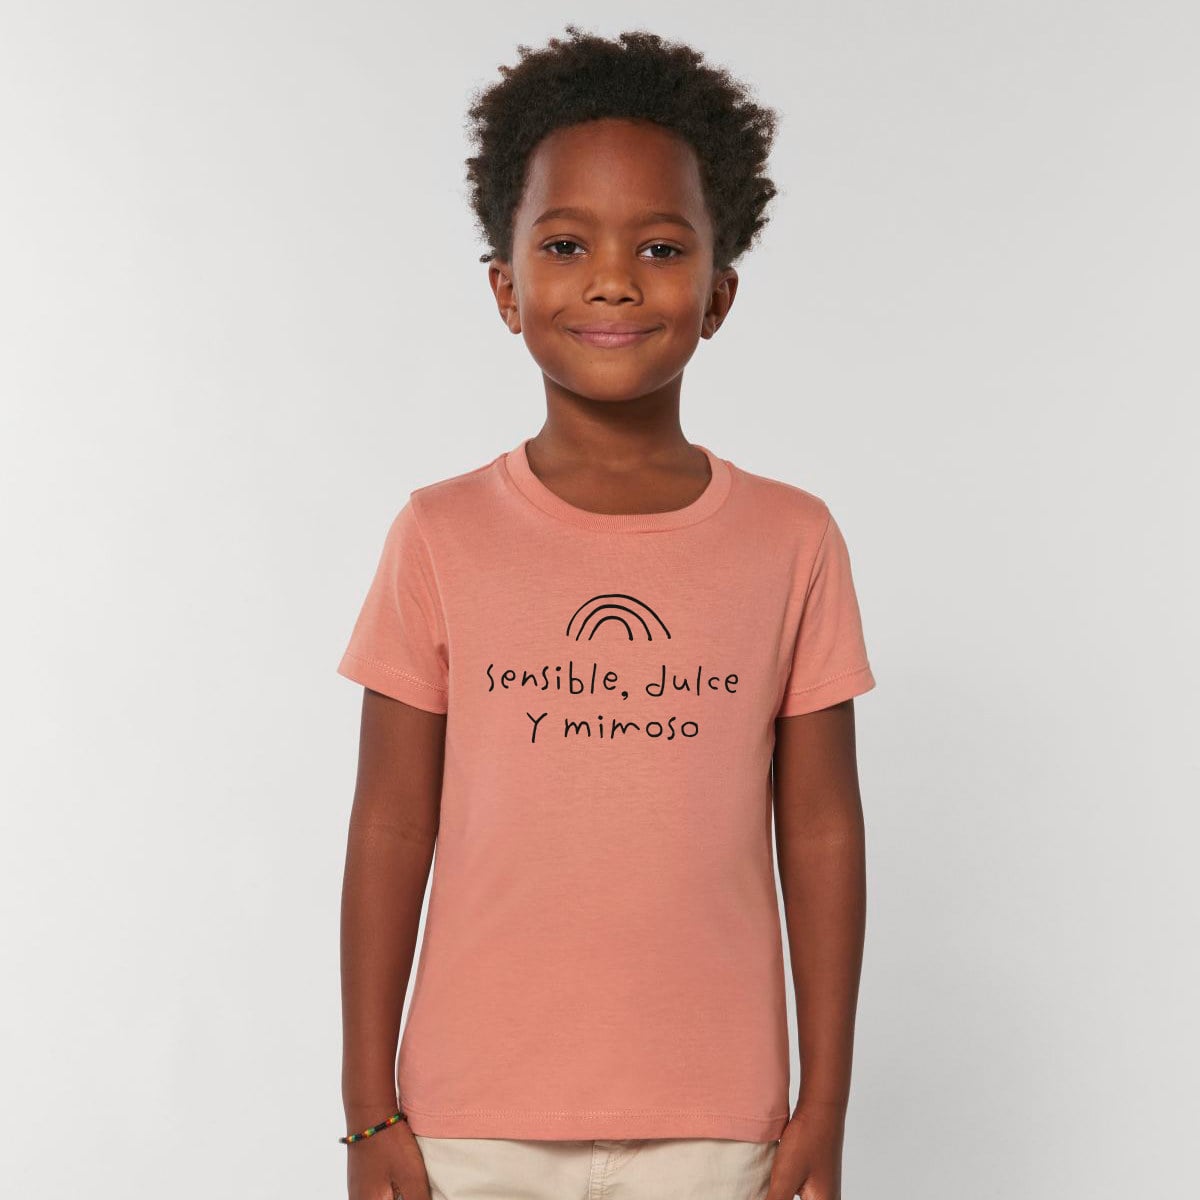 PUM Camiseta Sensible dulce y mimoso